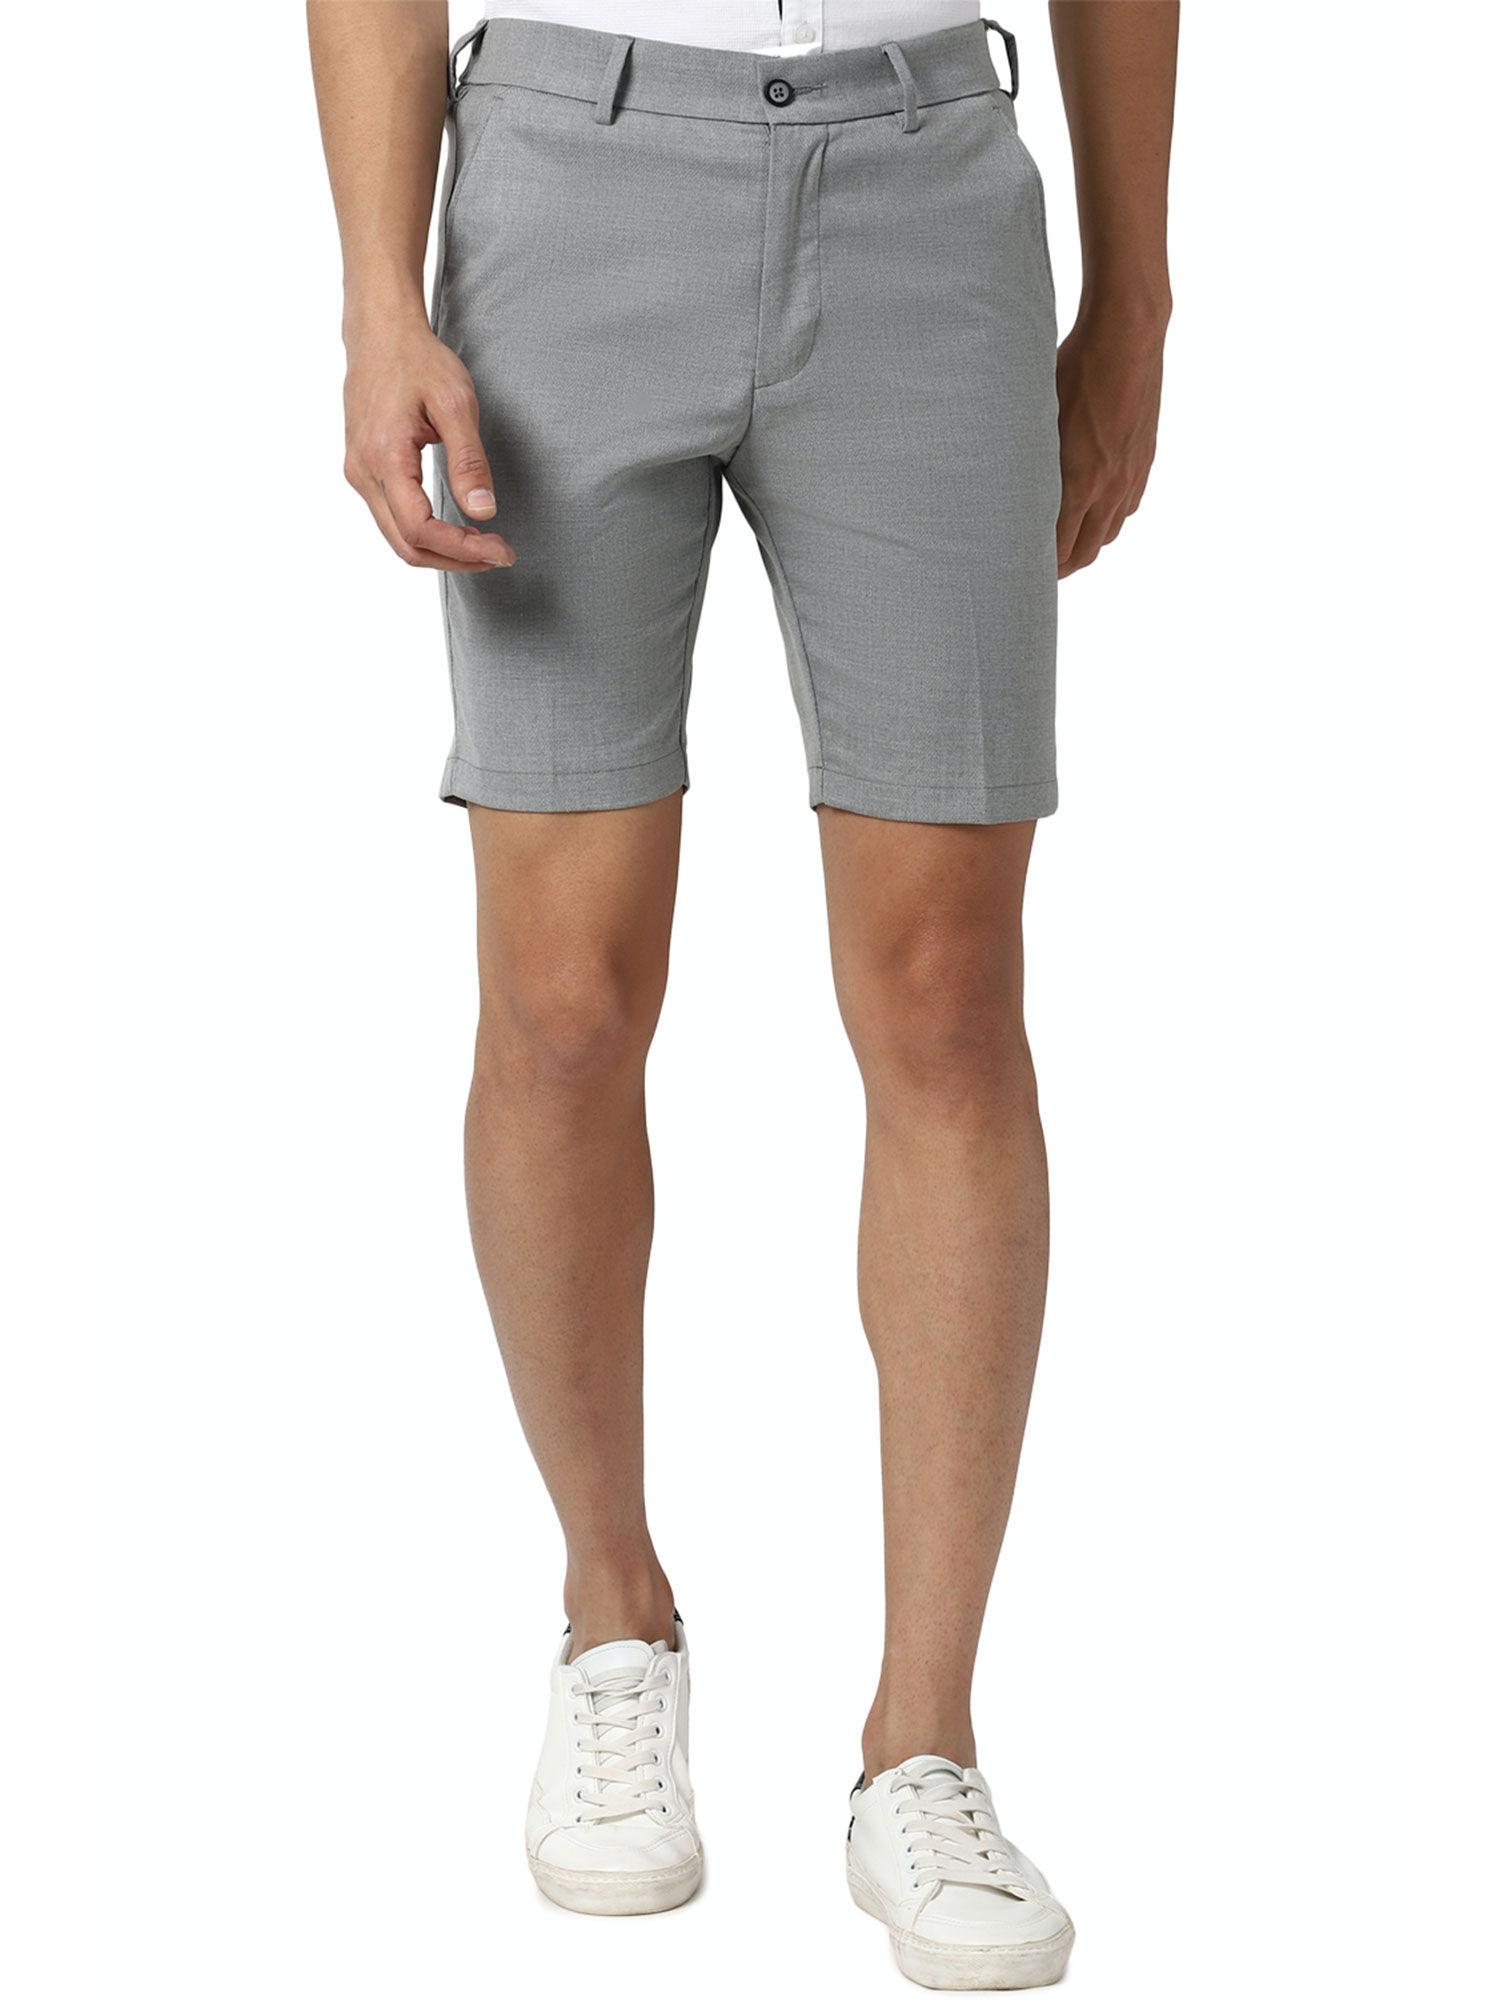 grey-shorts